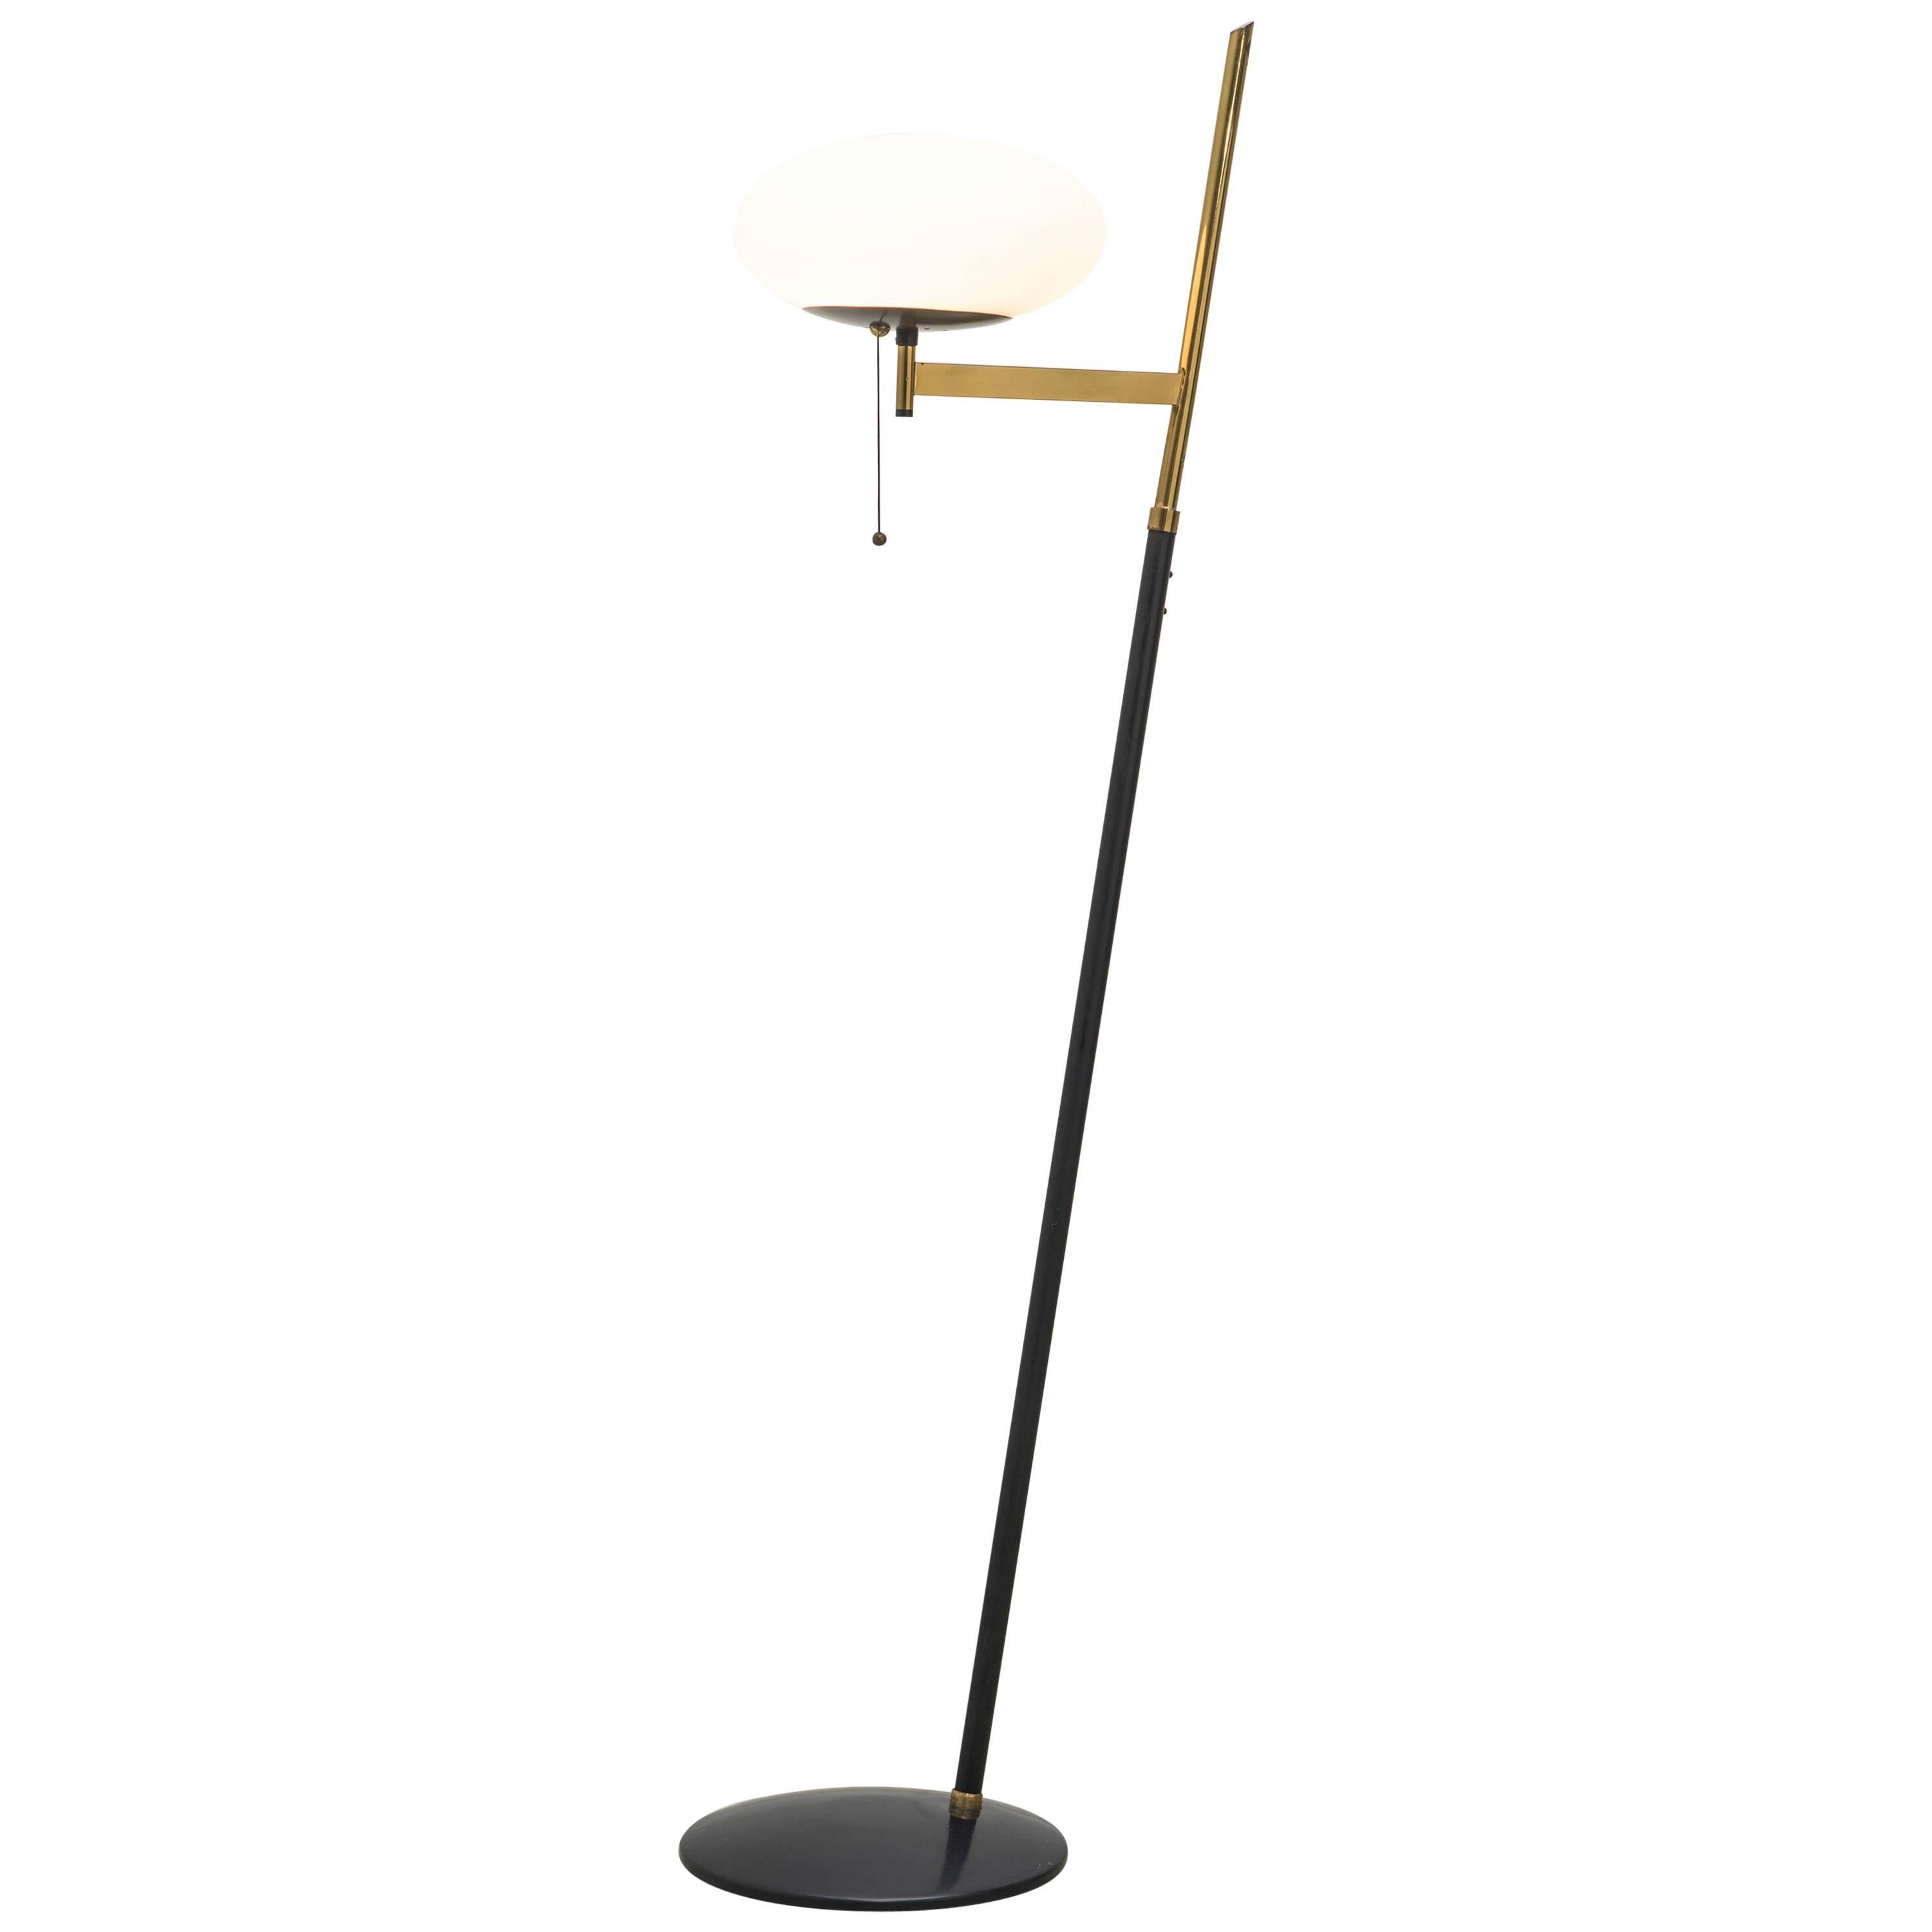 Vintage Italian Mid Century Floor Lamp, style of Arredoluce, 1960s For Sale